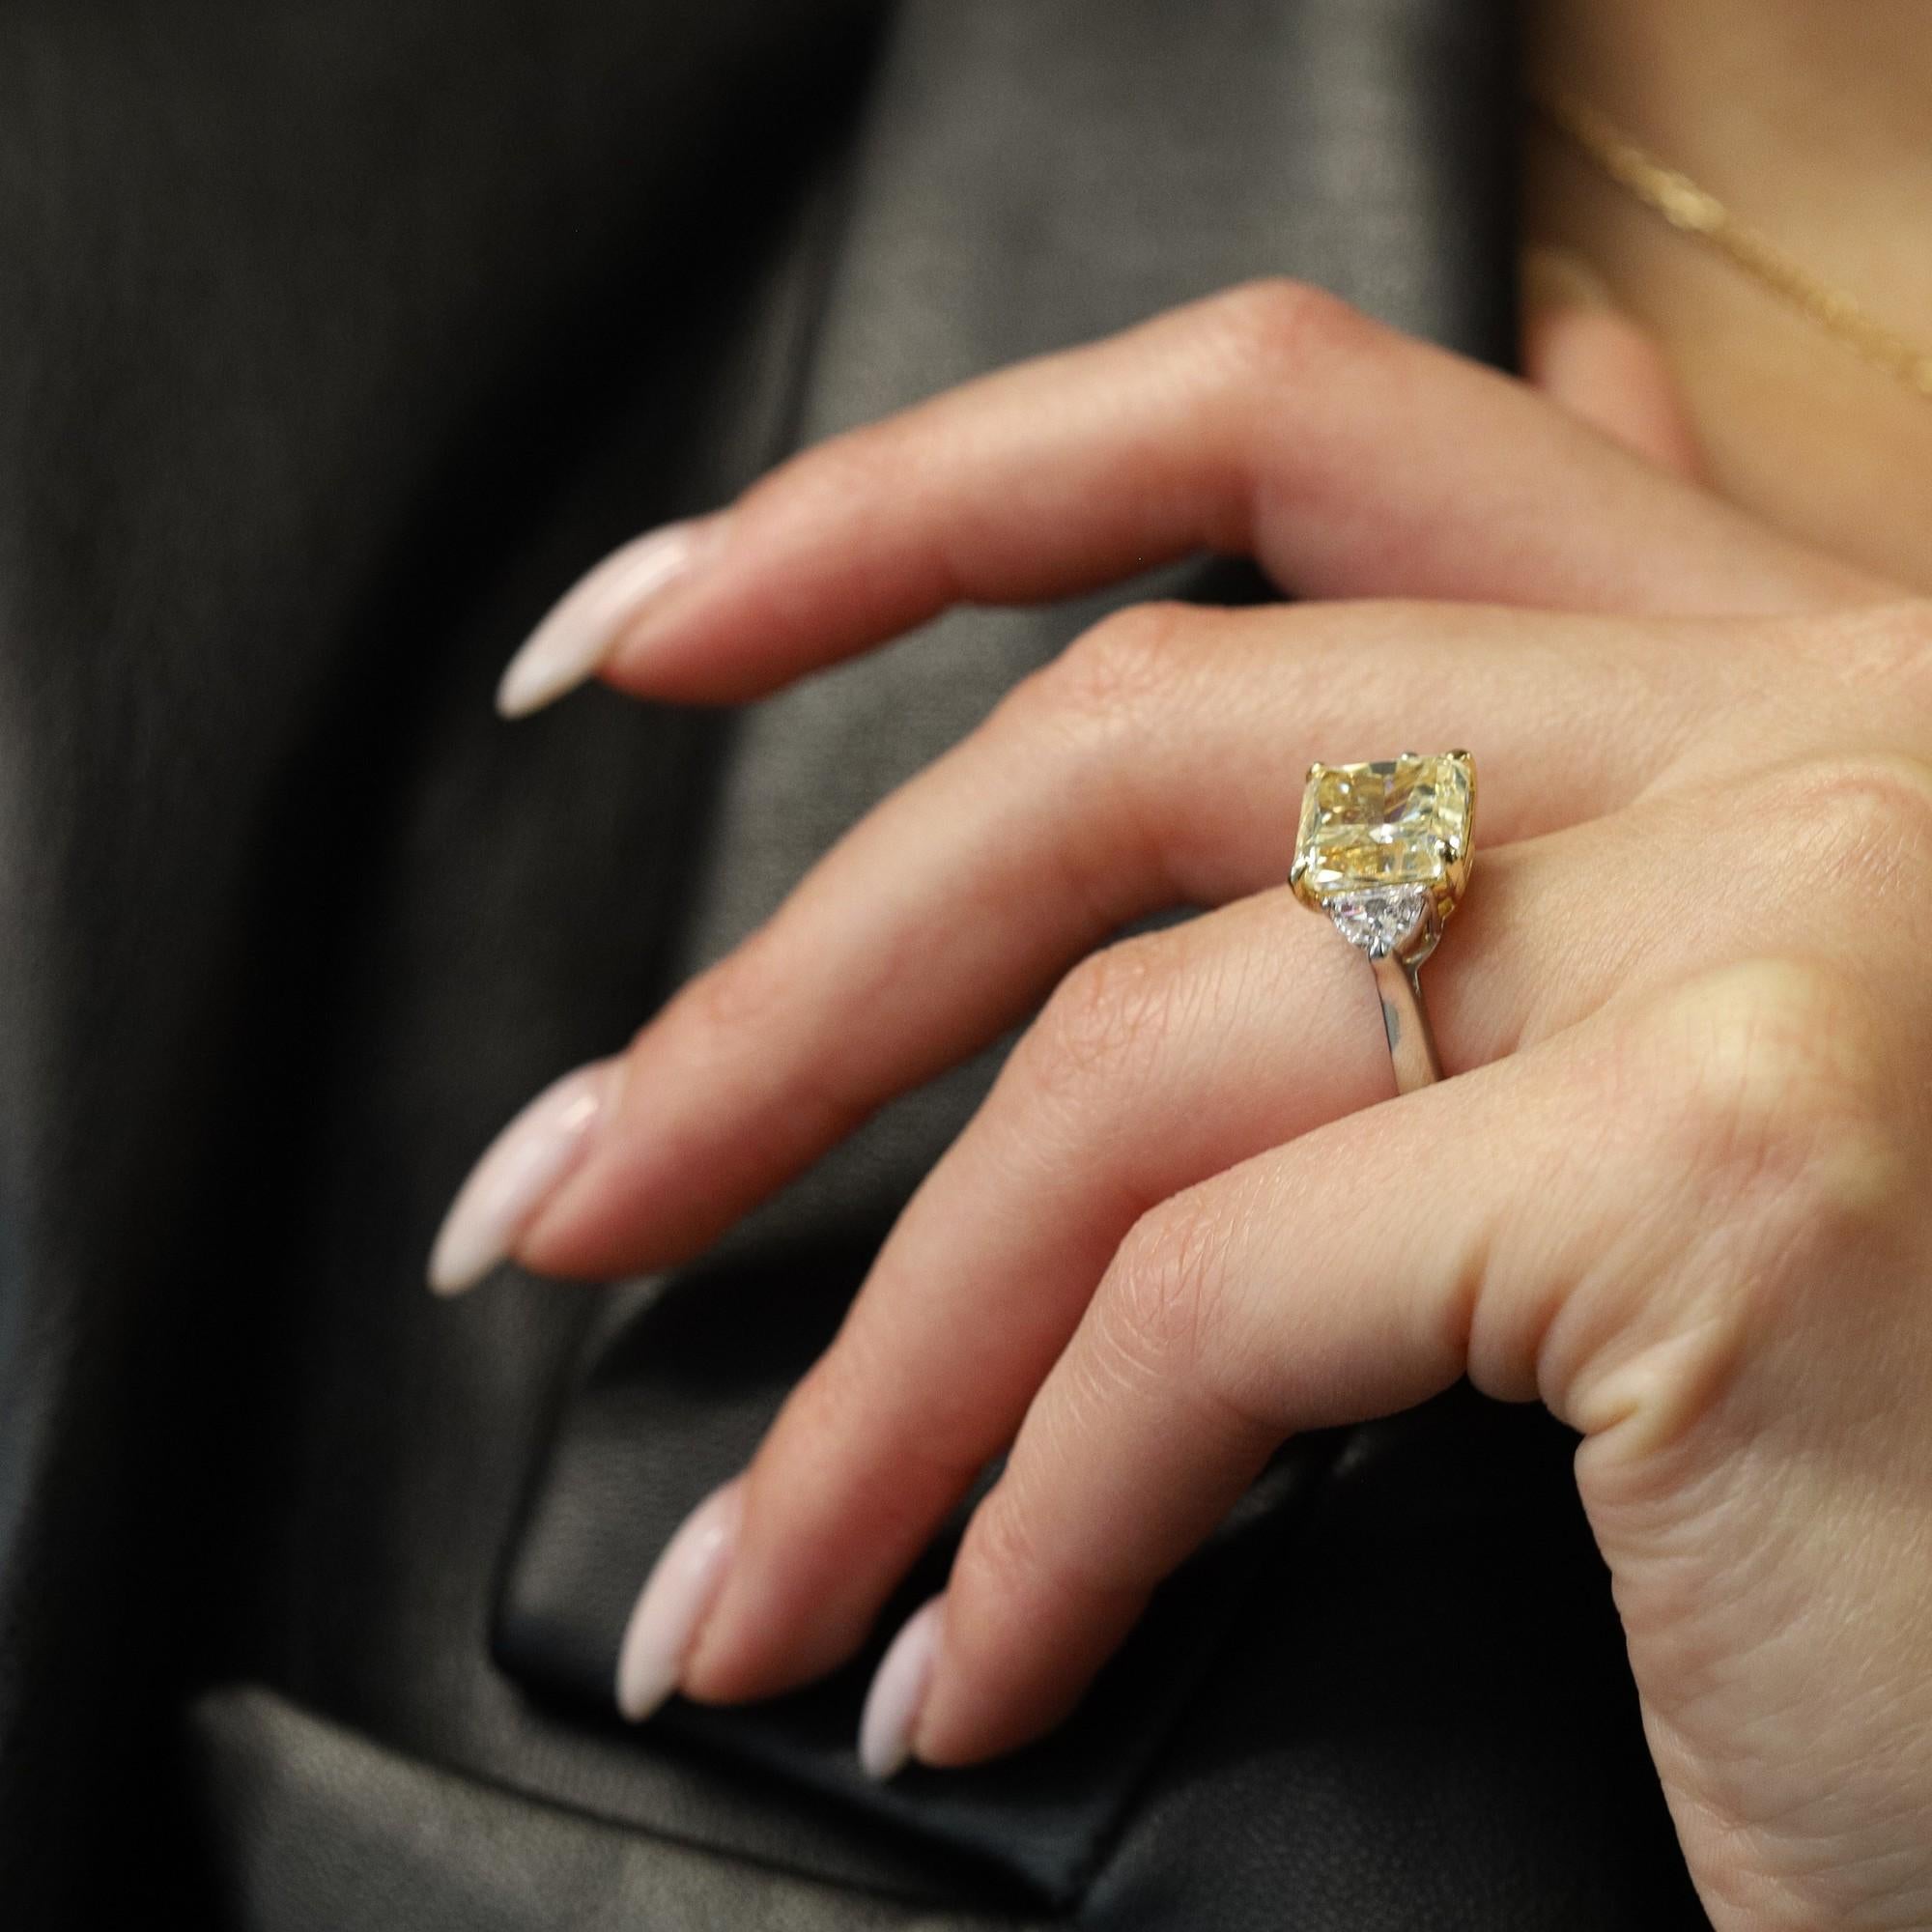 Bague diamant jaune clair taille princesse Platine Or jaune 18K 5,36cts en vente 2